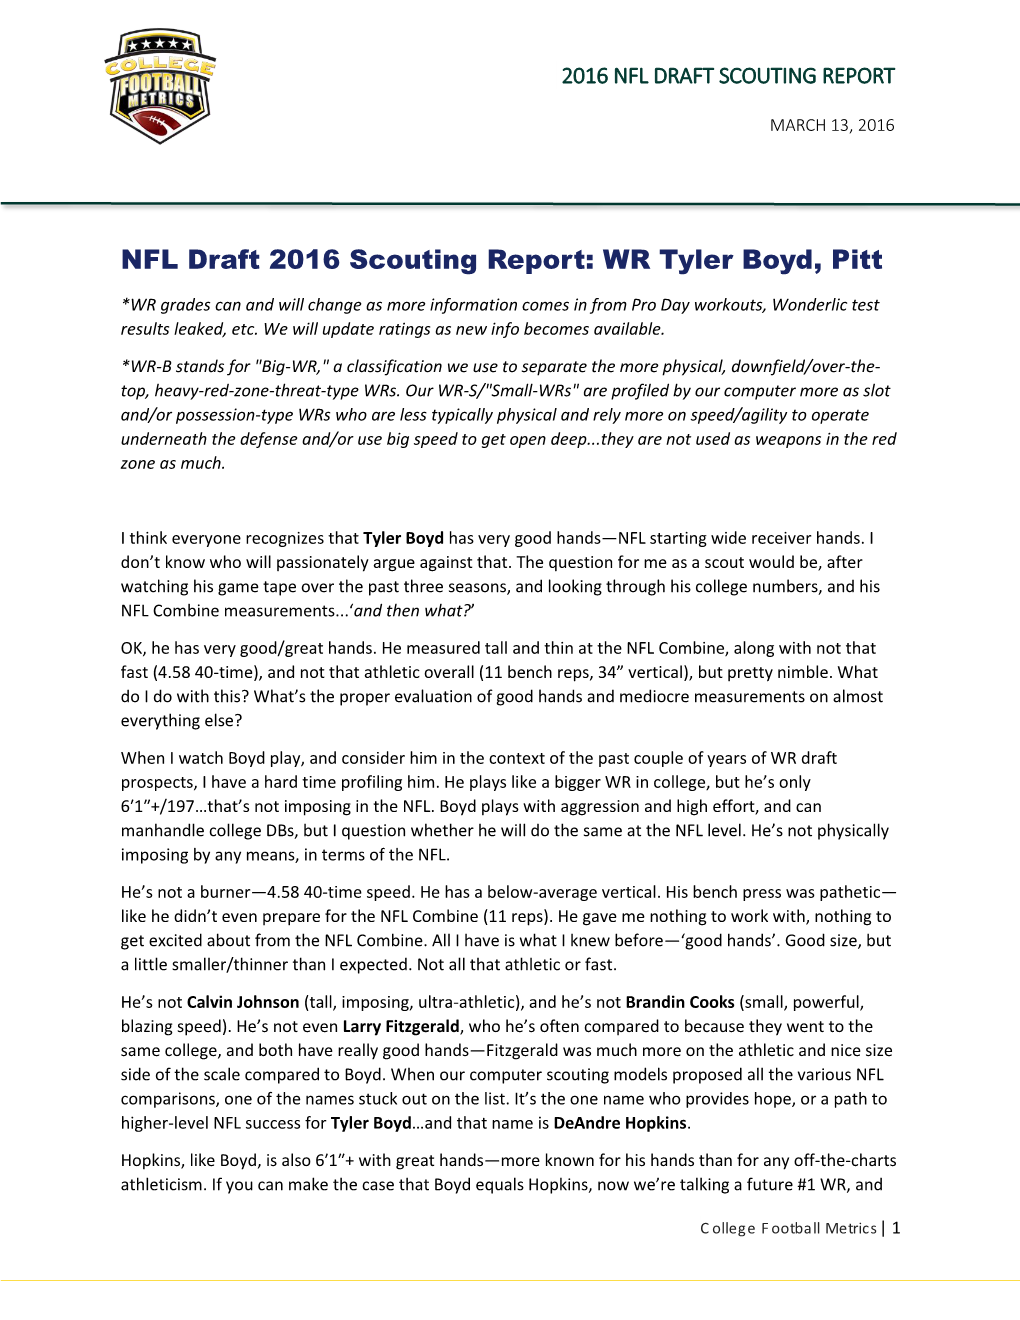 NFL Draft 2016 Scouting Report: WR Tyler Boyd, Pitt